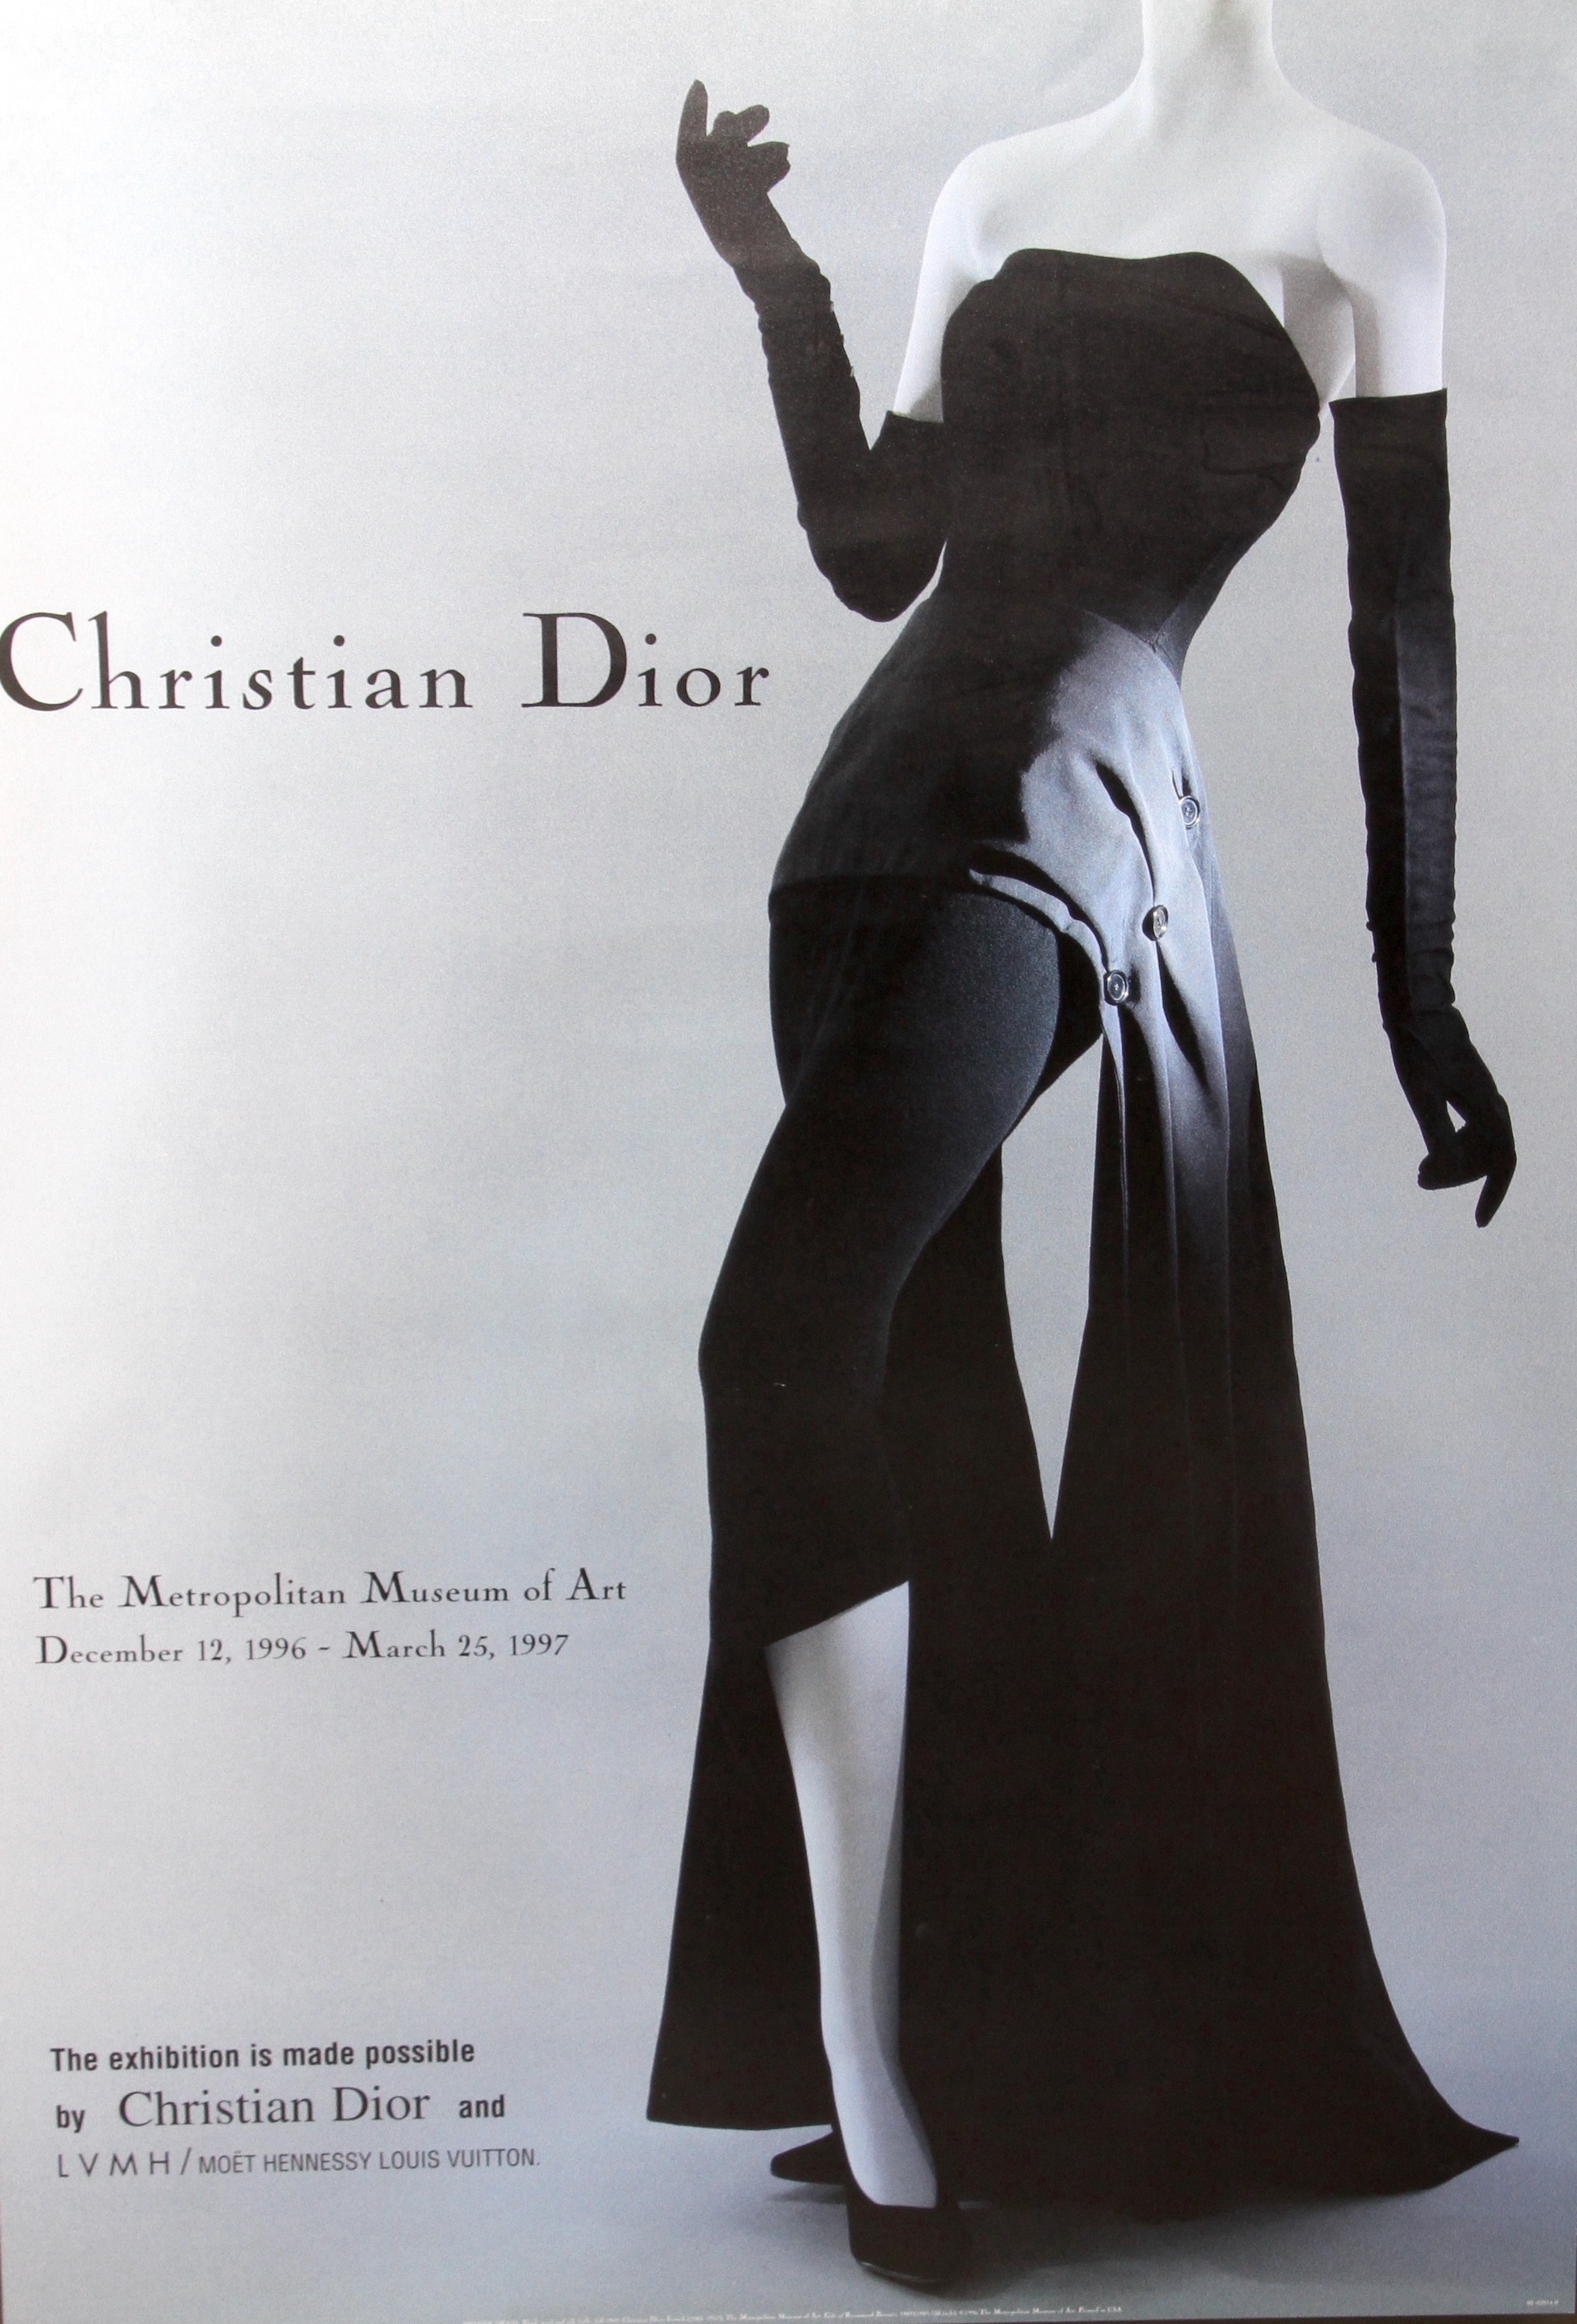 Christian Dior, Christian Dior Poster